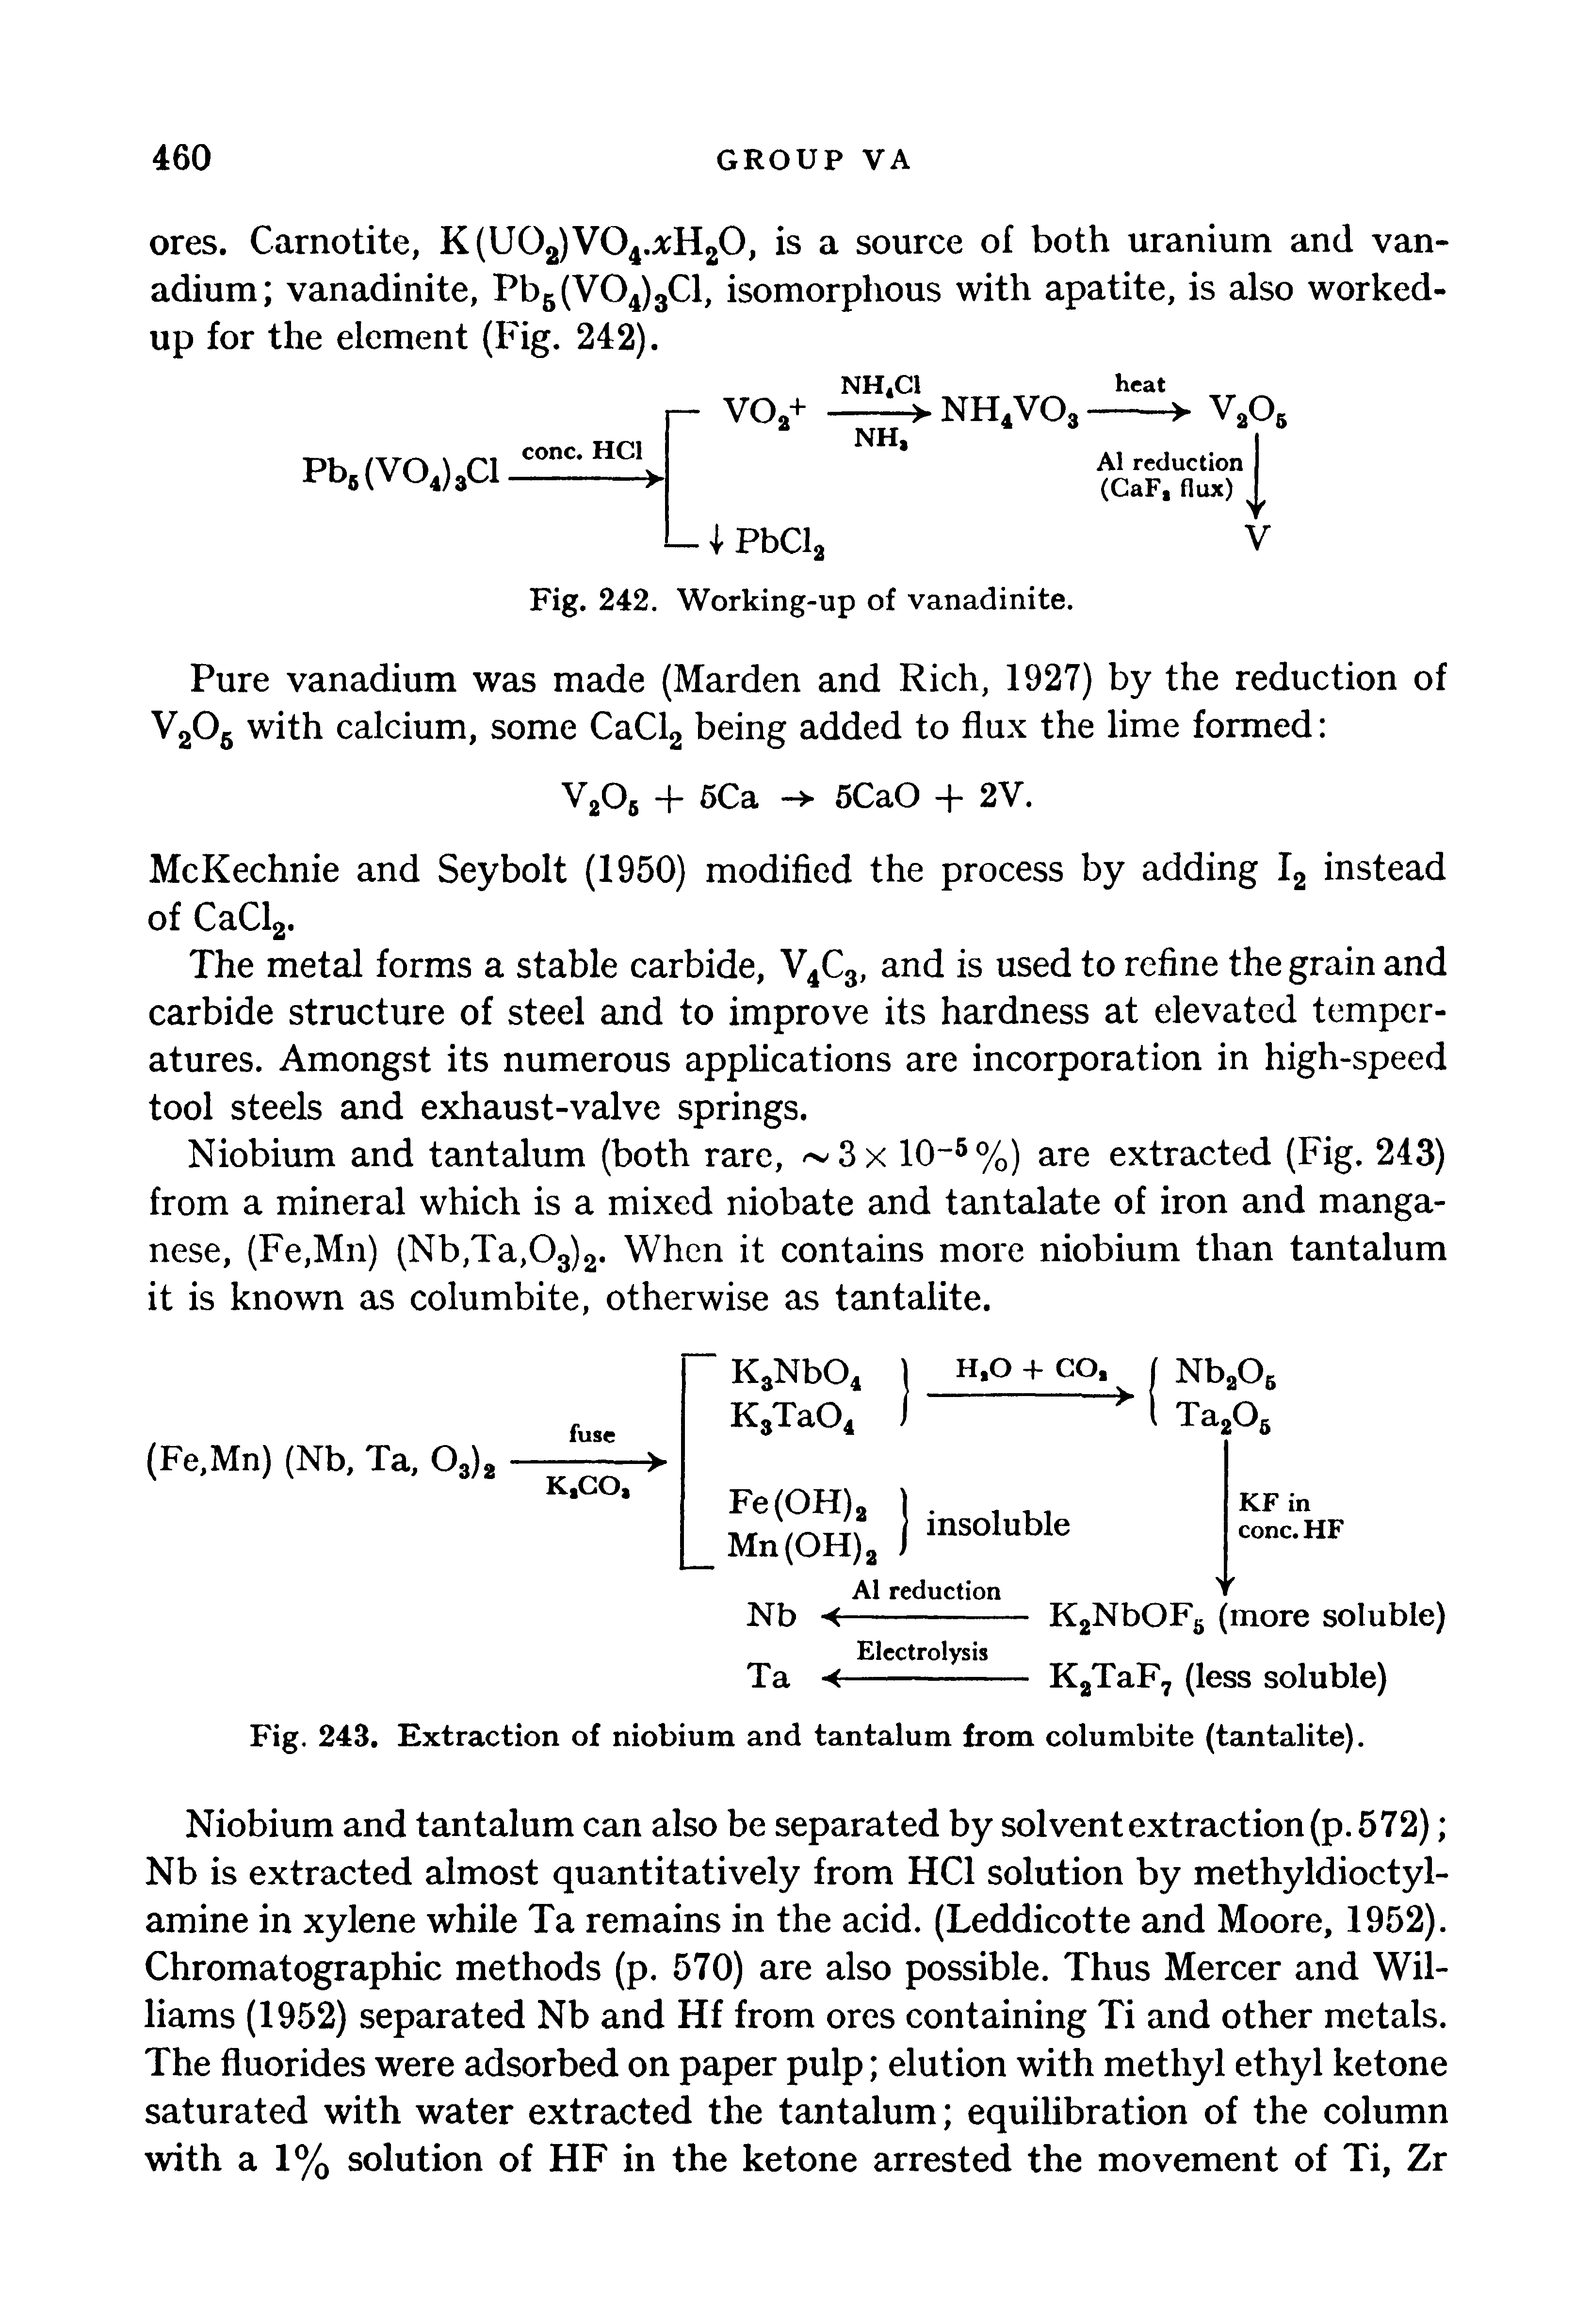 Fig. 243. Extraction of niobium and tantalum from columbite (tantalite).